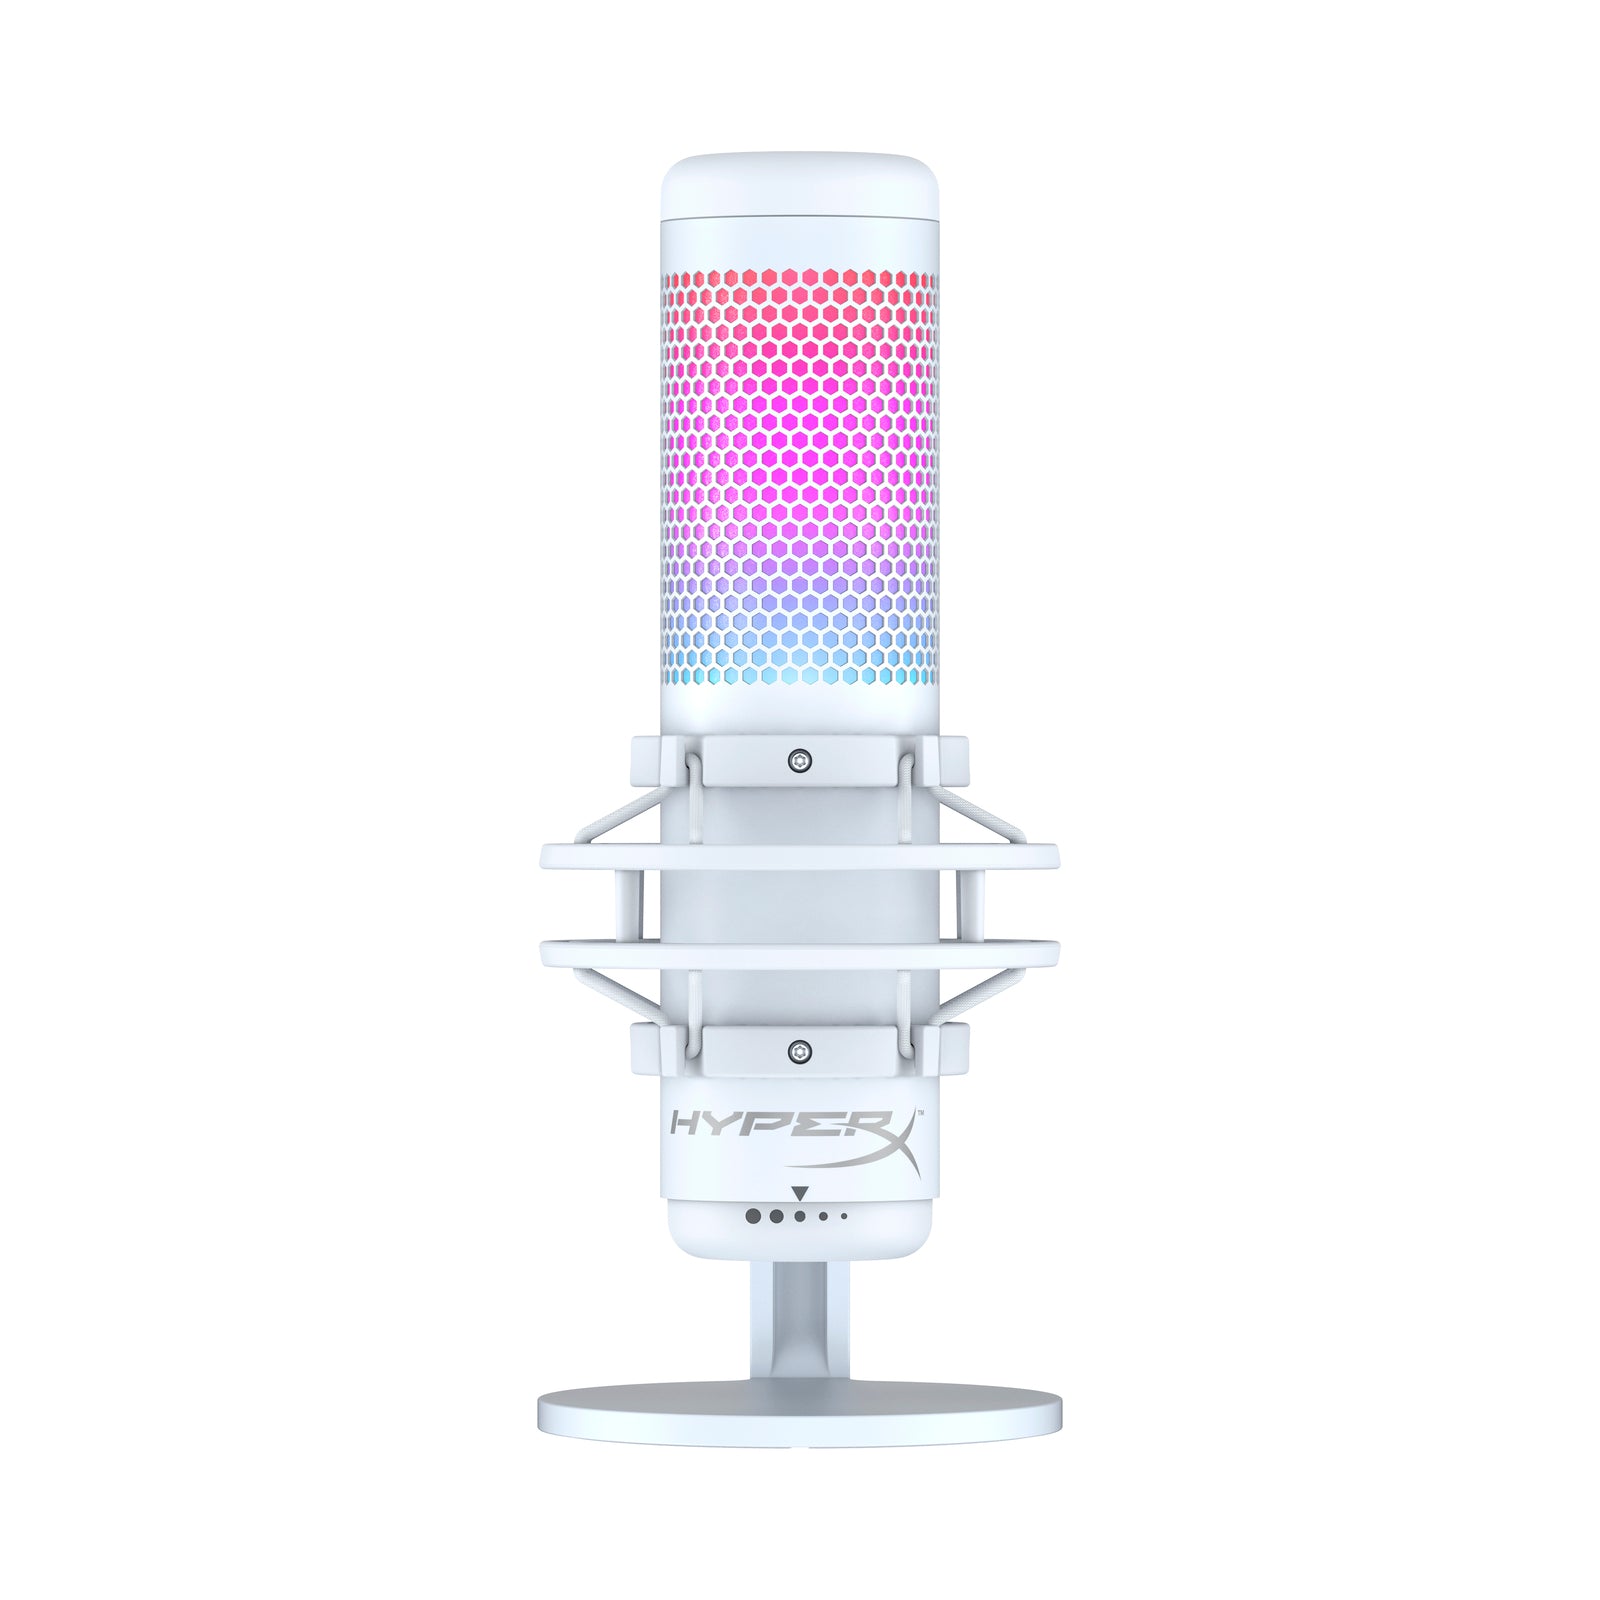 HyperX QuadCast S review: Light up your mic